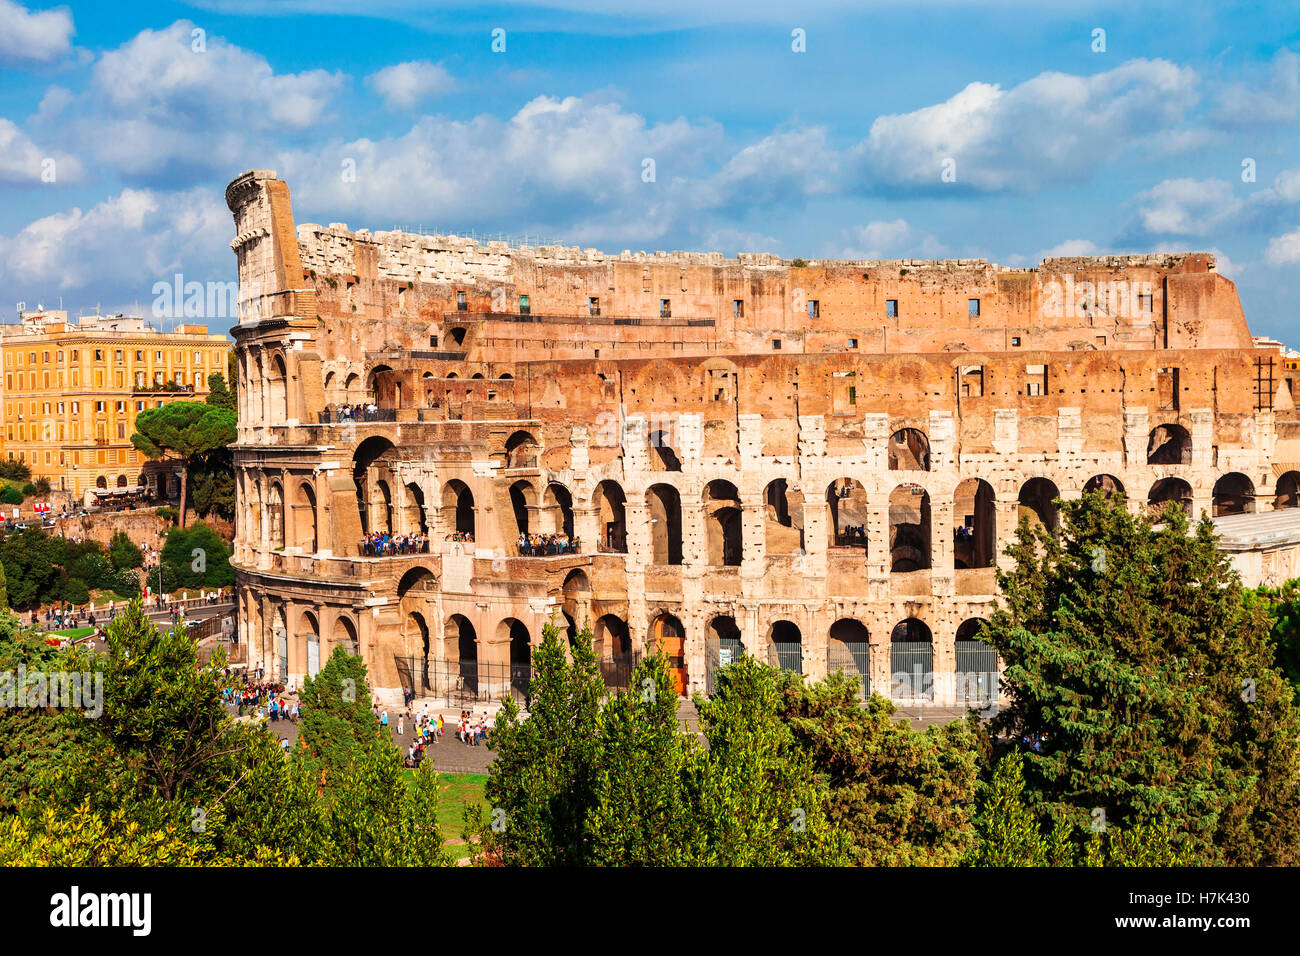 Greatest landmarks - Colosseum in Rome Stock Photo